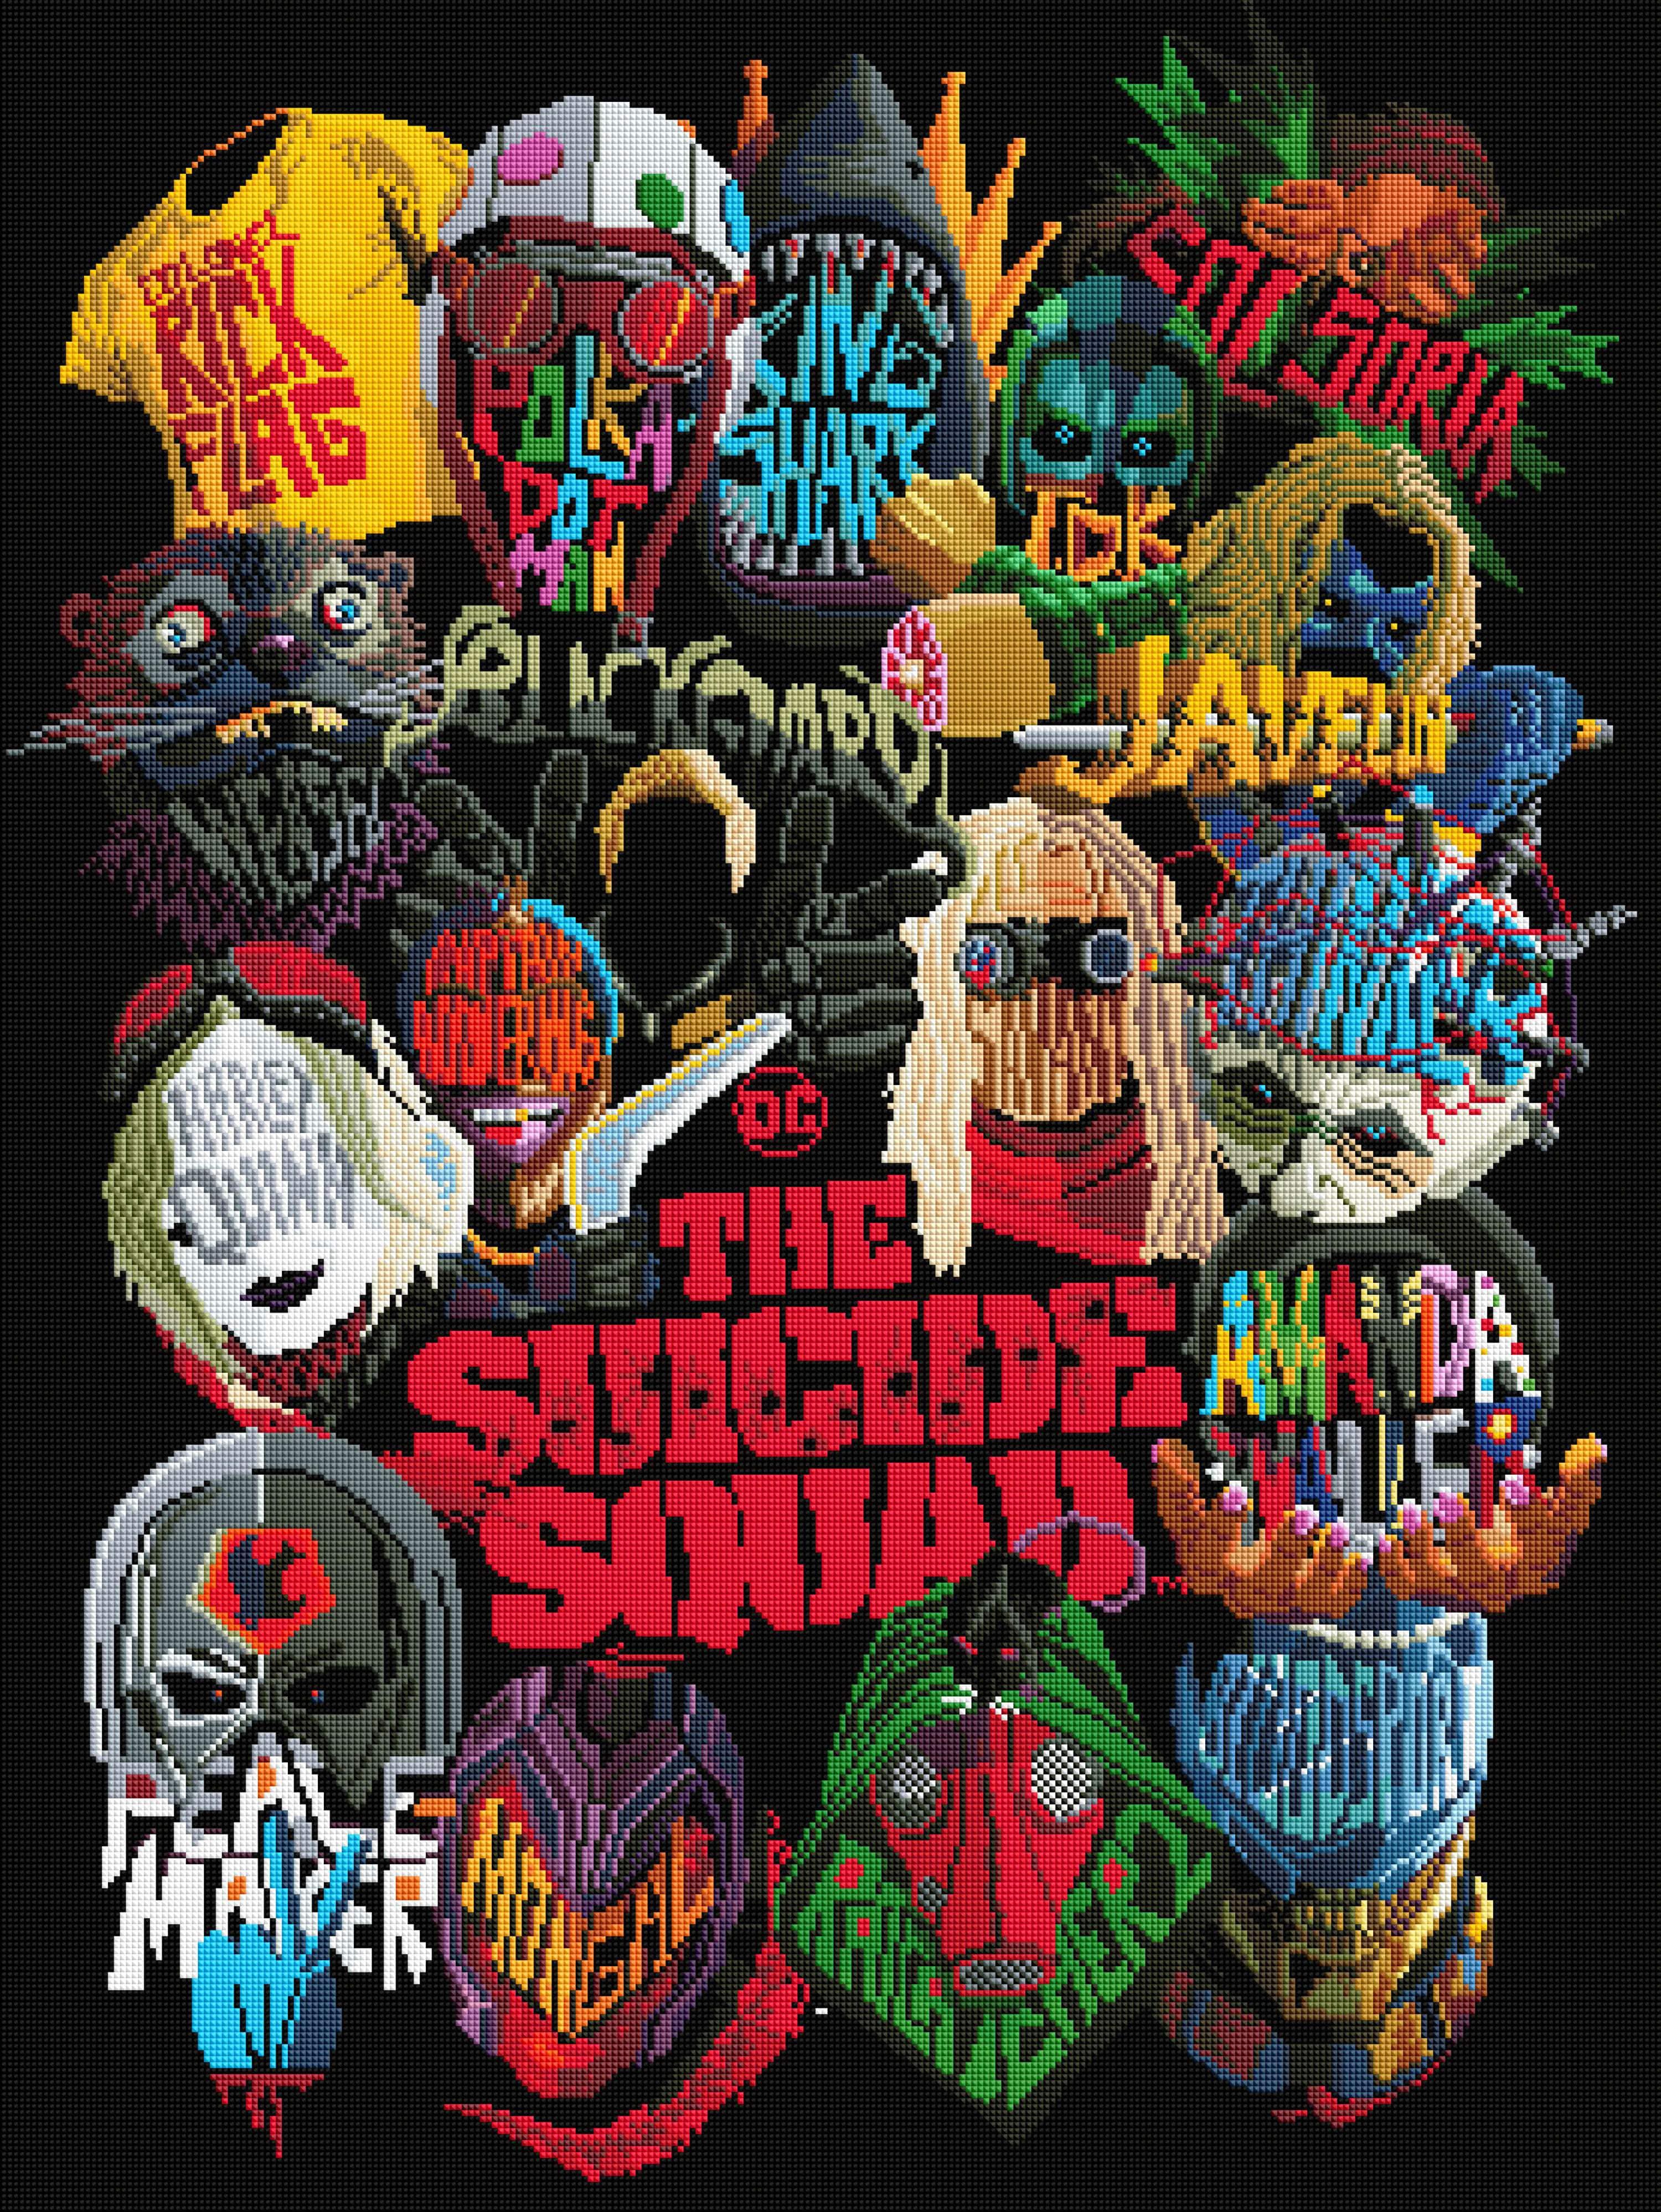 200+] Suicide Squad Backgrounds | Wallpapers.com